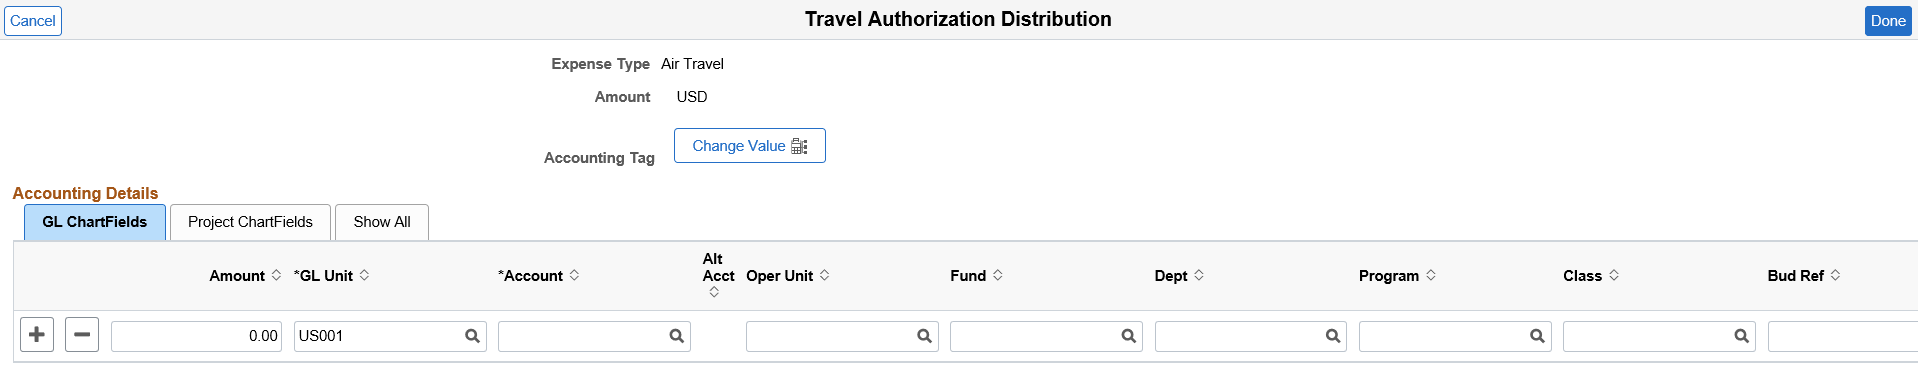 Travel Authorization Distribution